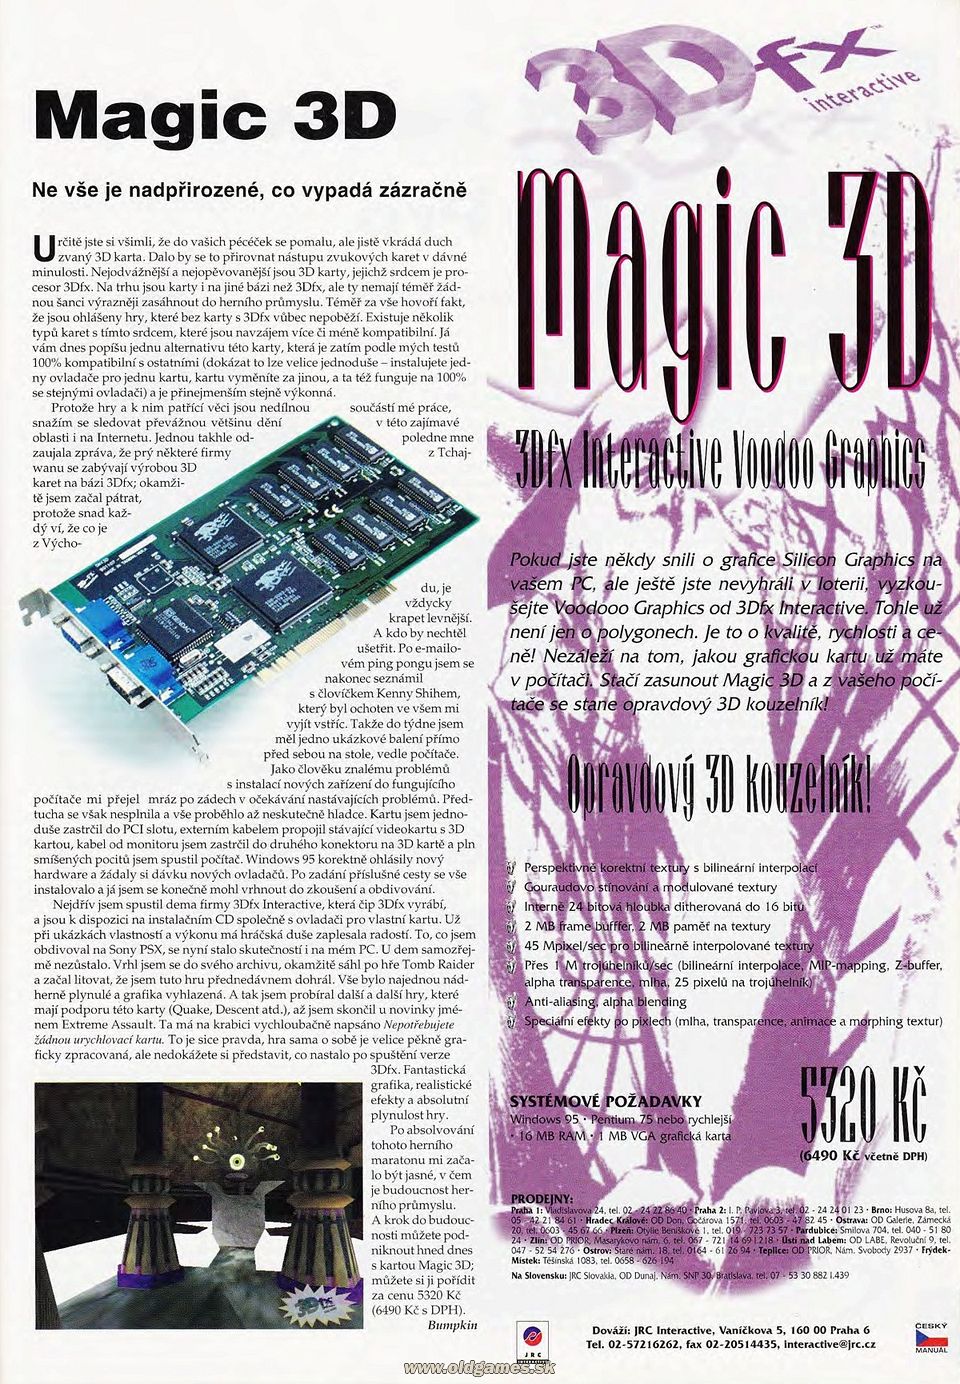 Hardware: Magic 3D